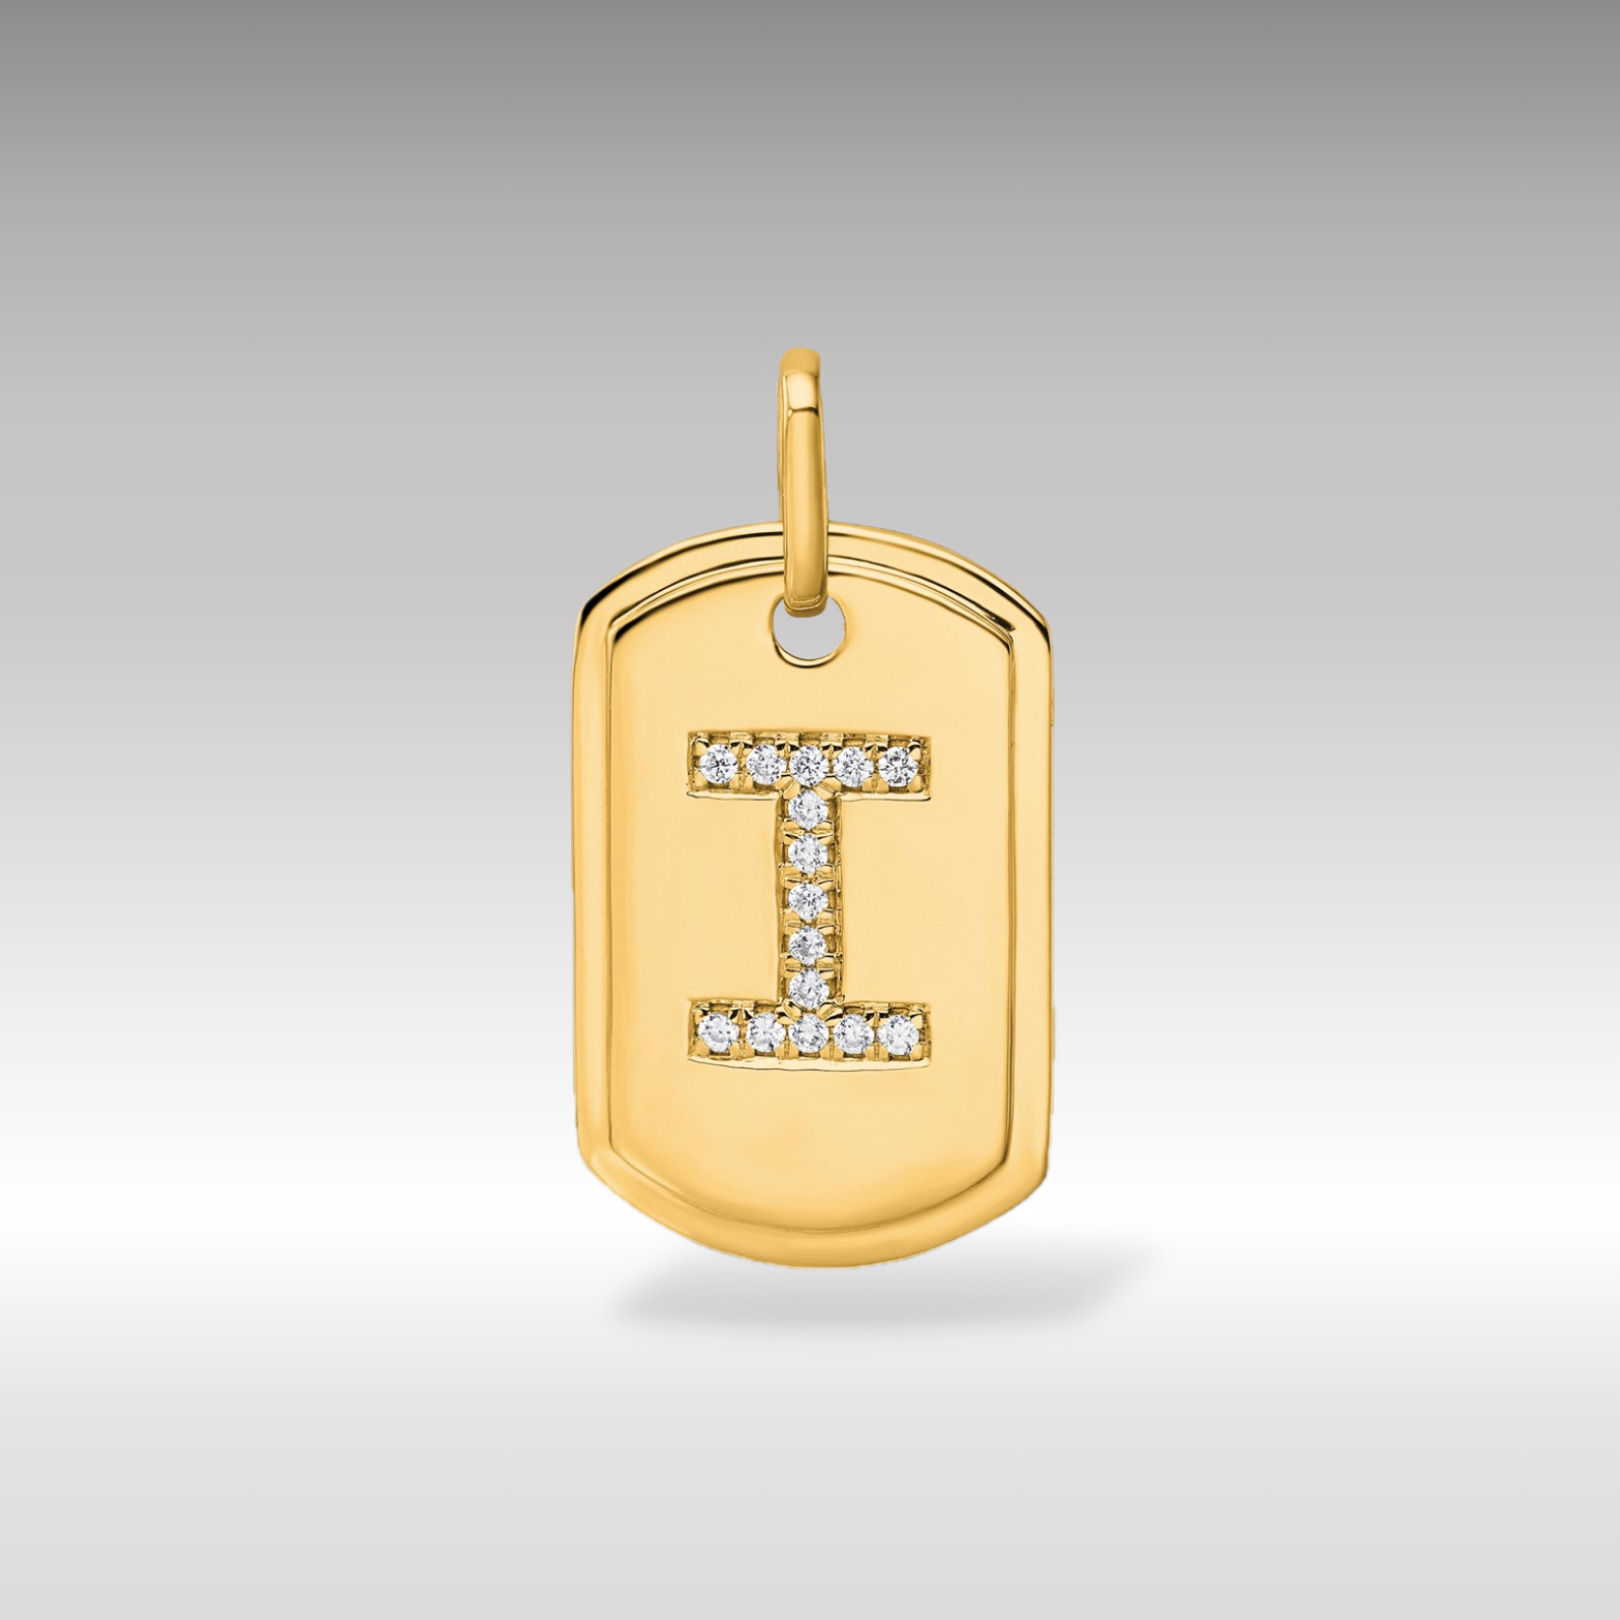 14K Gold Initial "I" Dog Tag With Genuine Diamonds - Charlie & Co. Jewelry